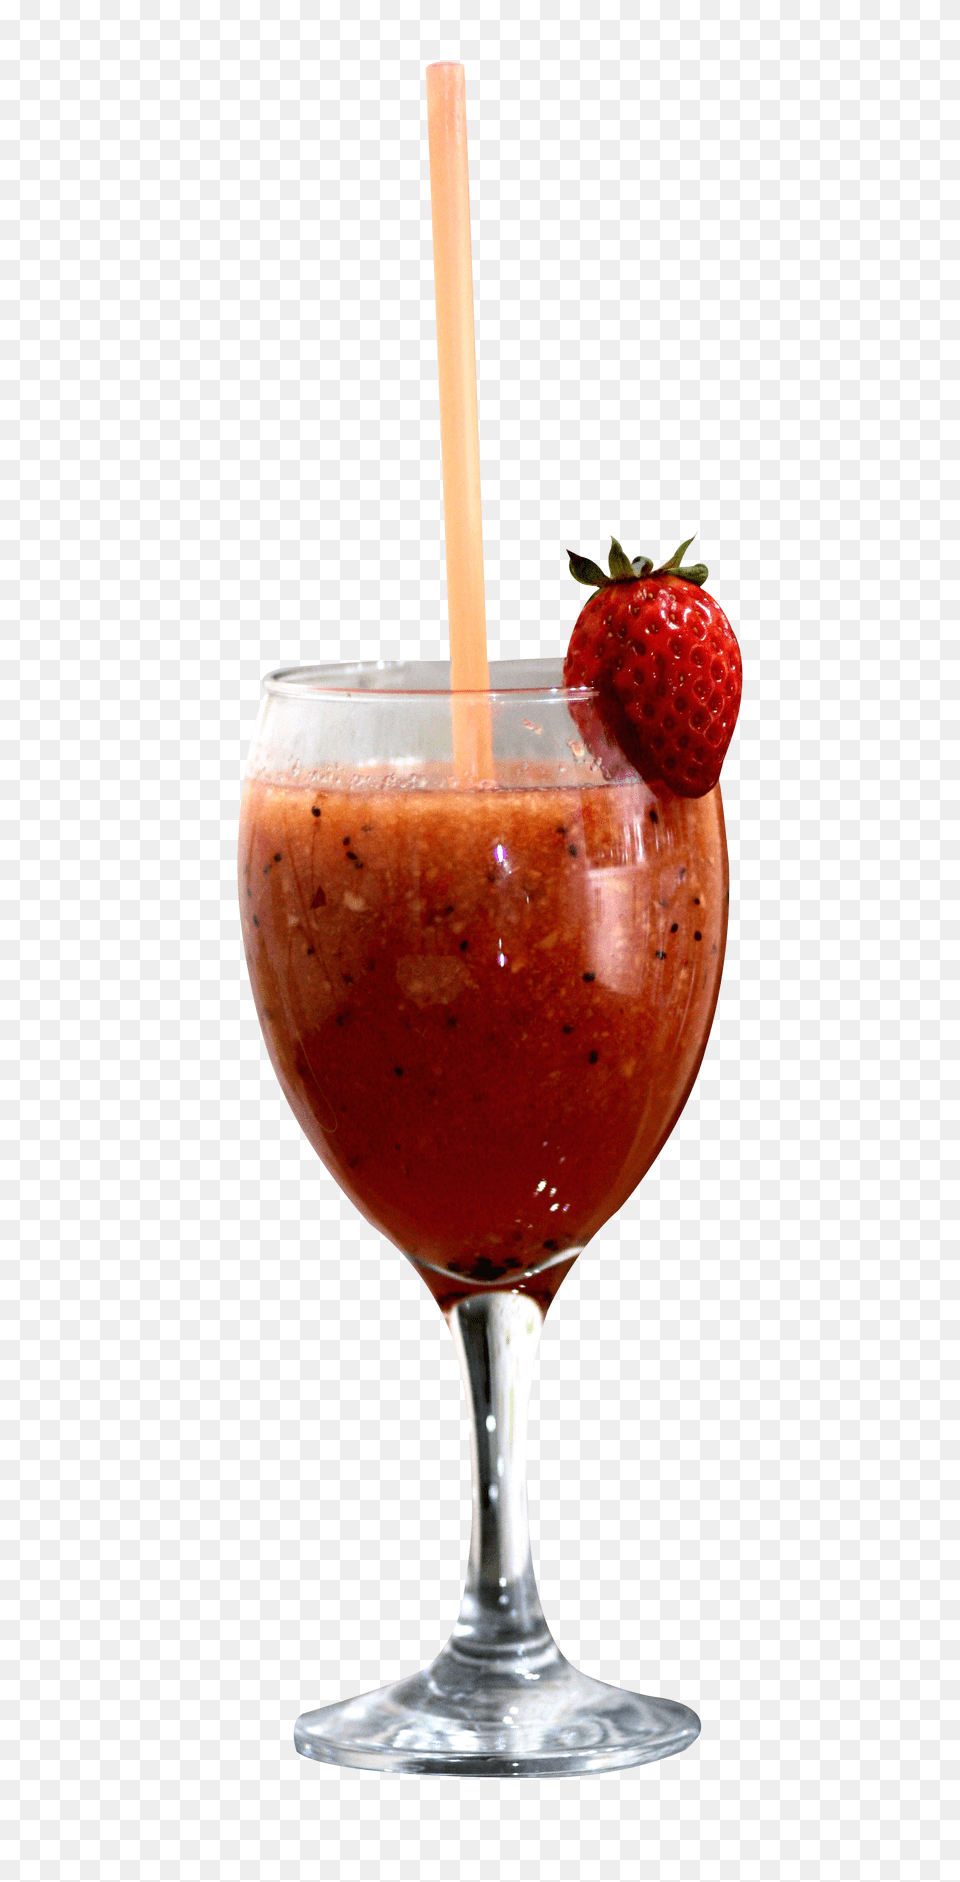 Pngpix Com Cocktail Transparent Image, Beverage, Juice, Strawberry, Berry Png